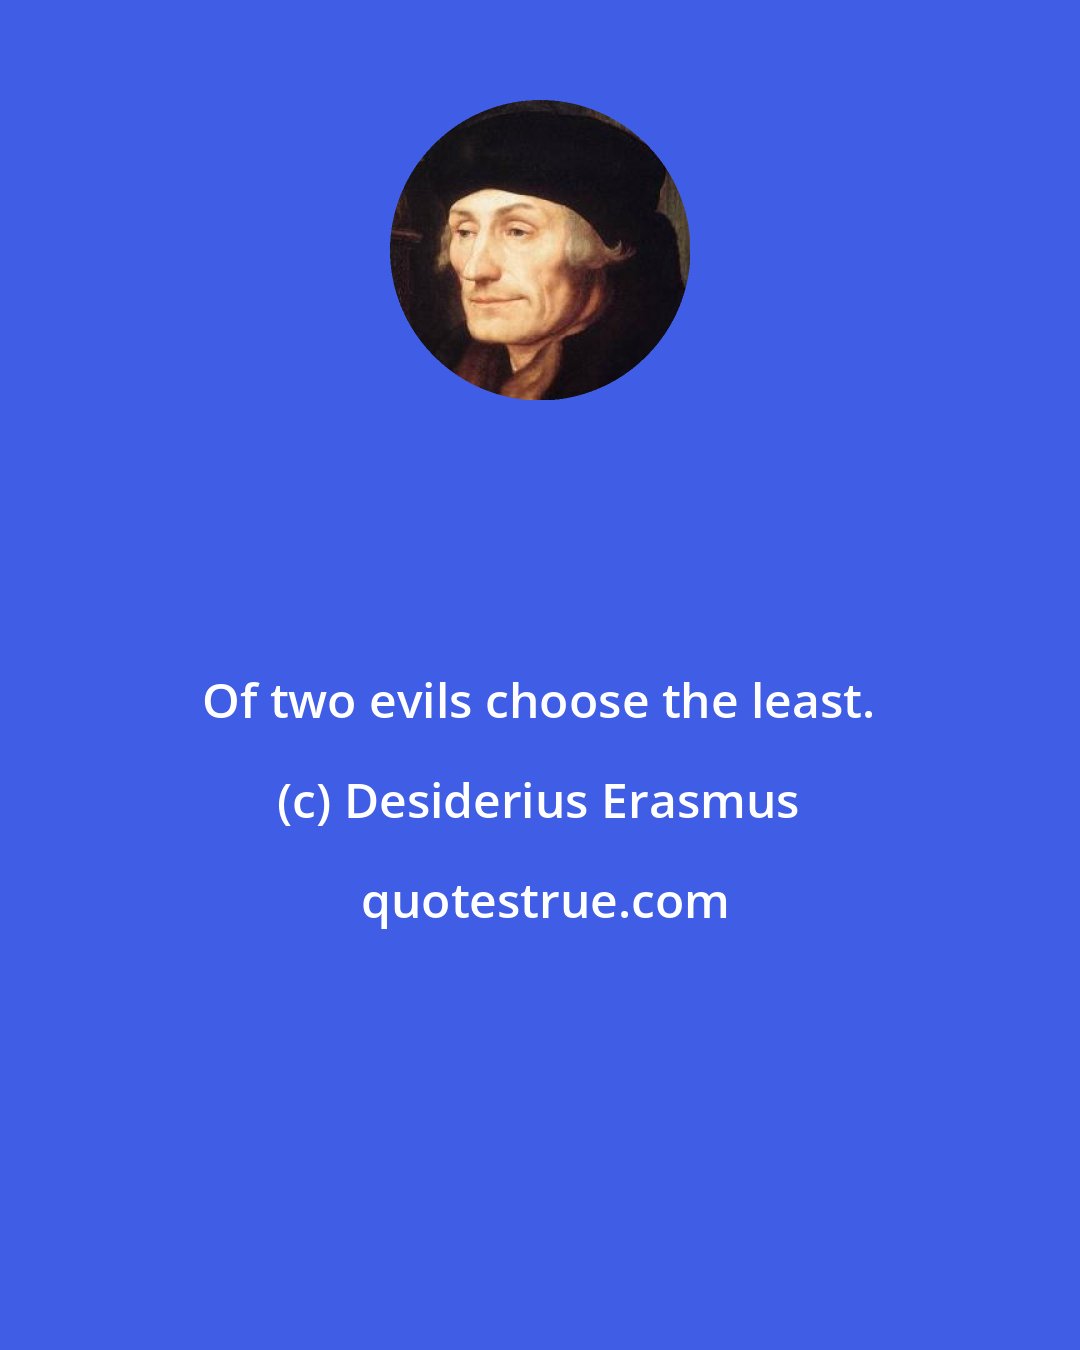 Desiderius Erasmus: Of two evils choose the least.